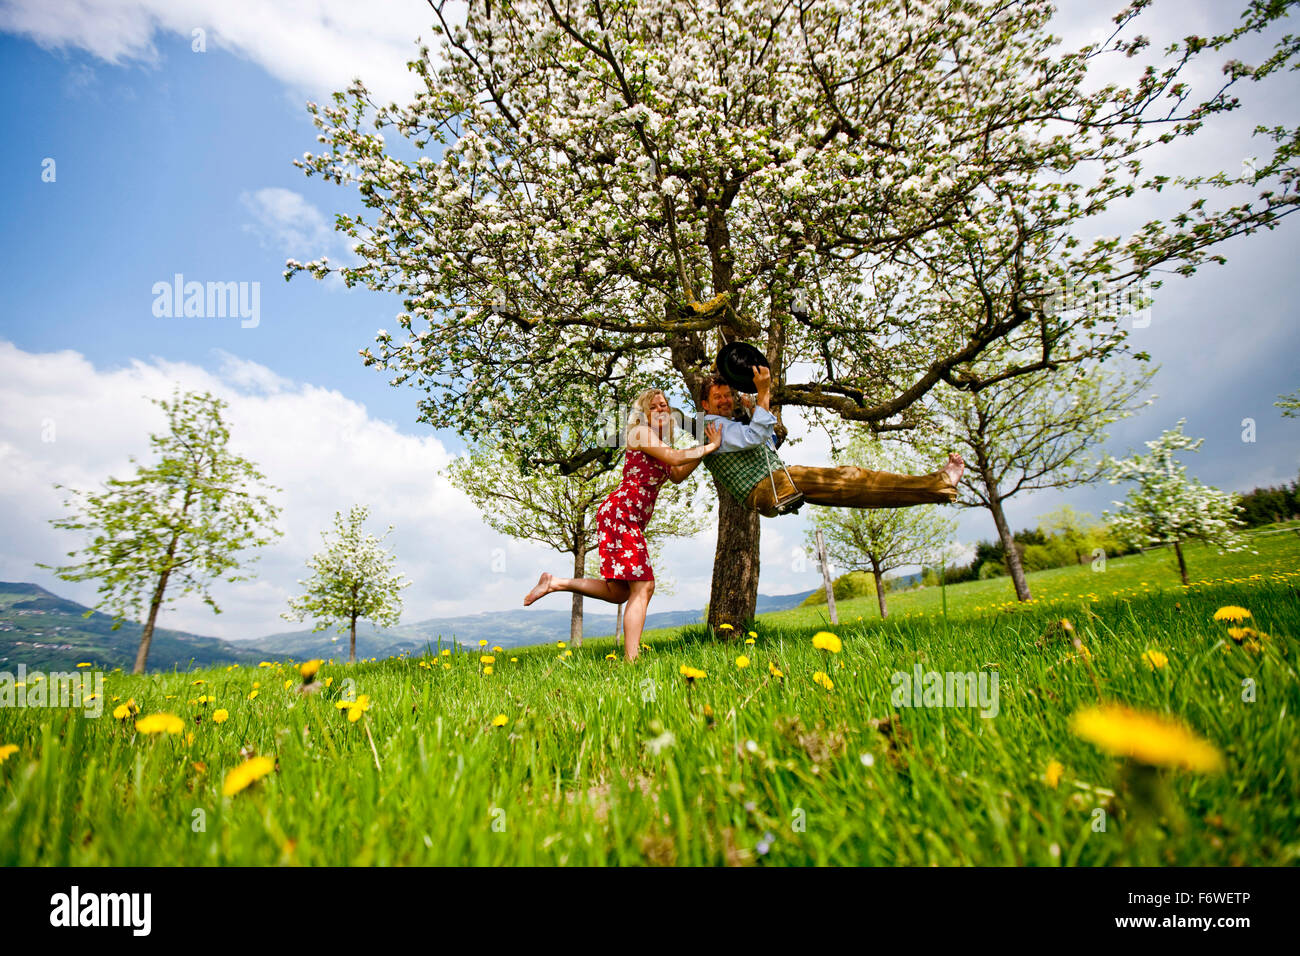 Woman pushing a man on a swing in an apple tree, Stubenberg, Styria, Austria Stock Photo